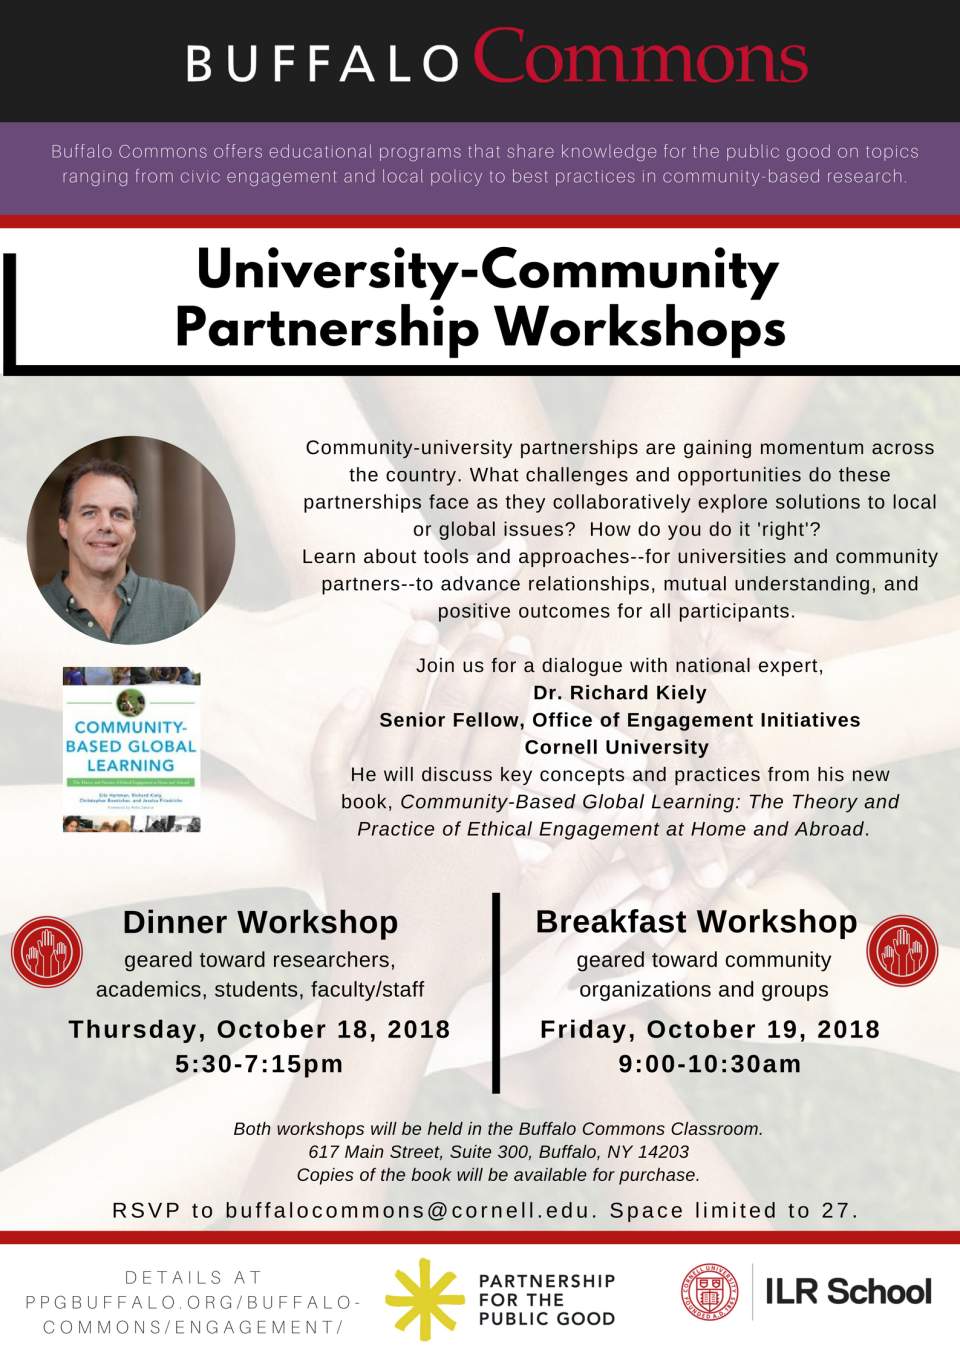 University-Community Partnership Workshop (Dinner)